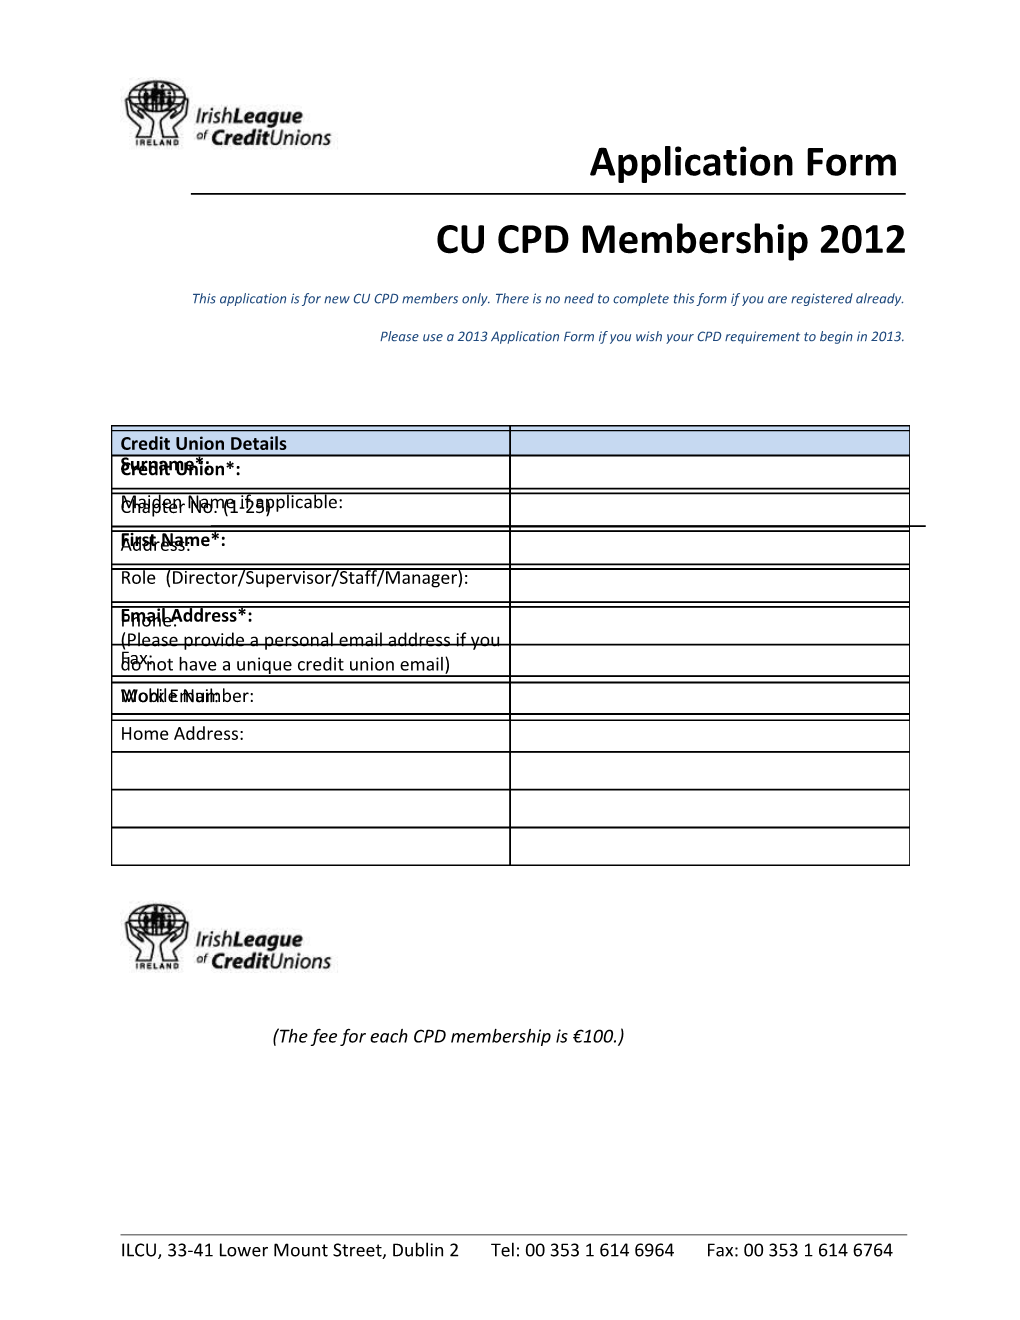 CU CPD Membership 2012